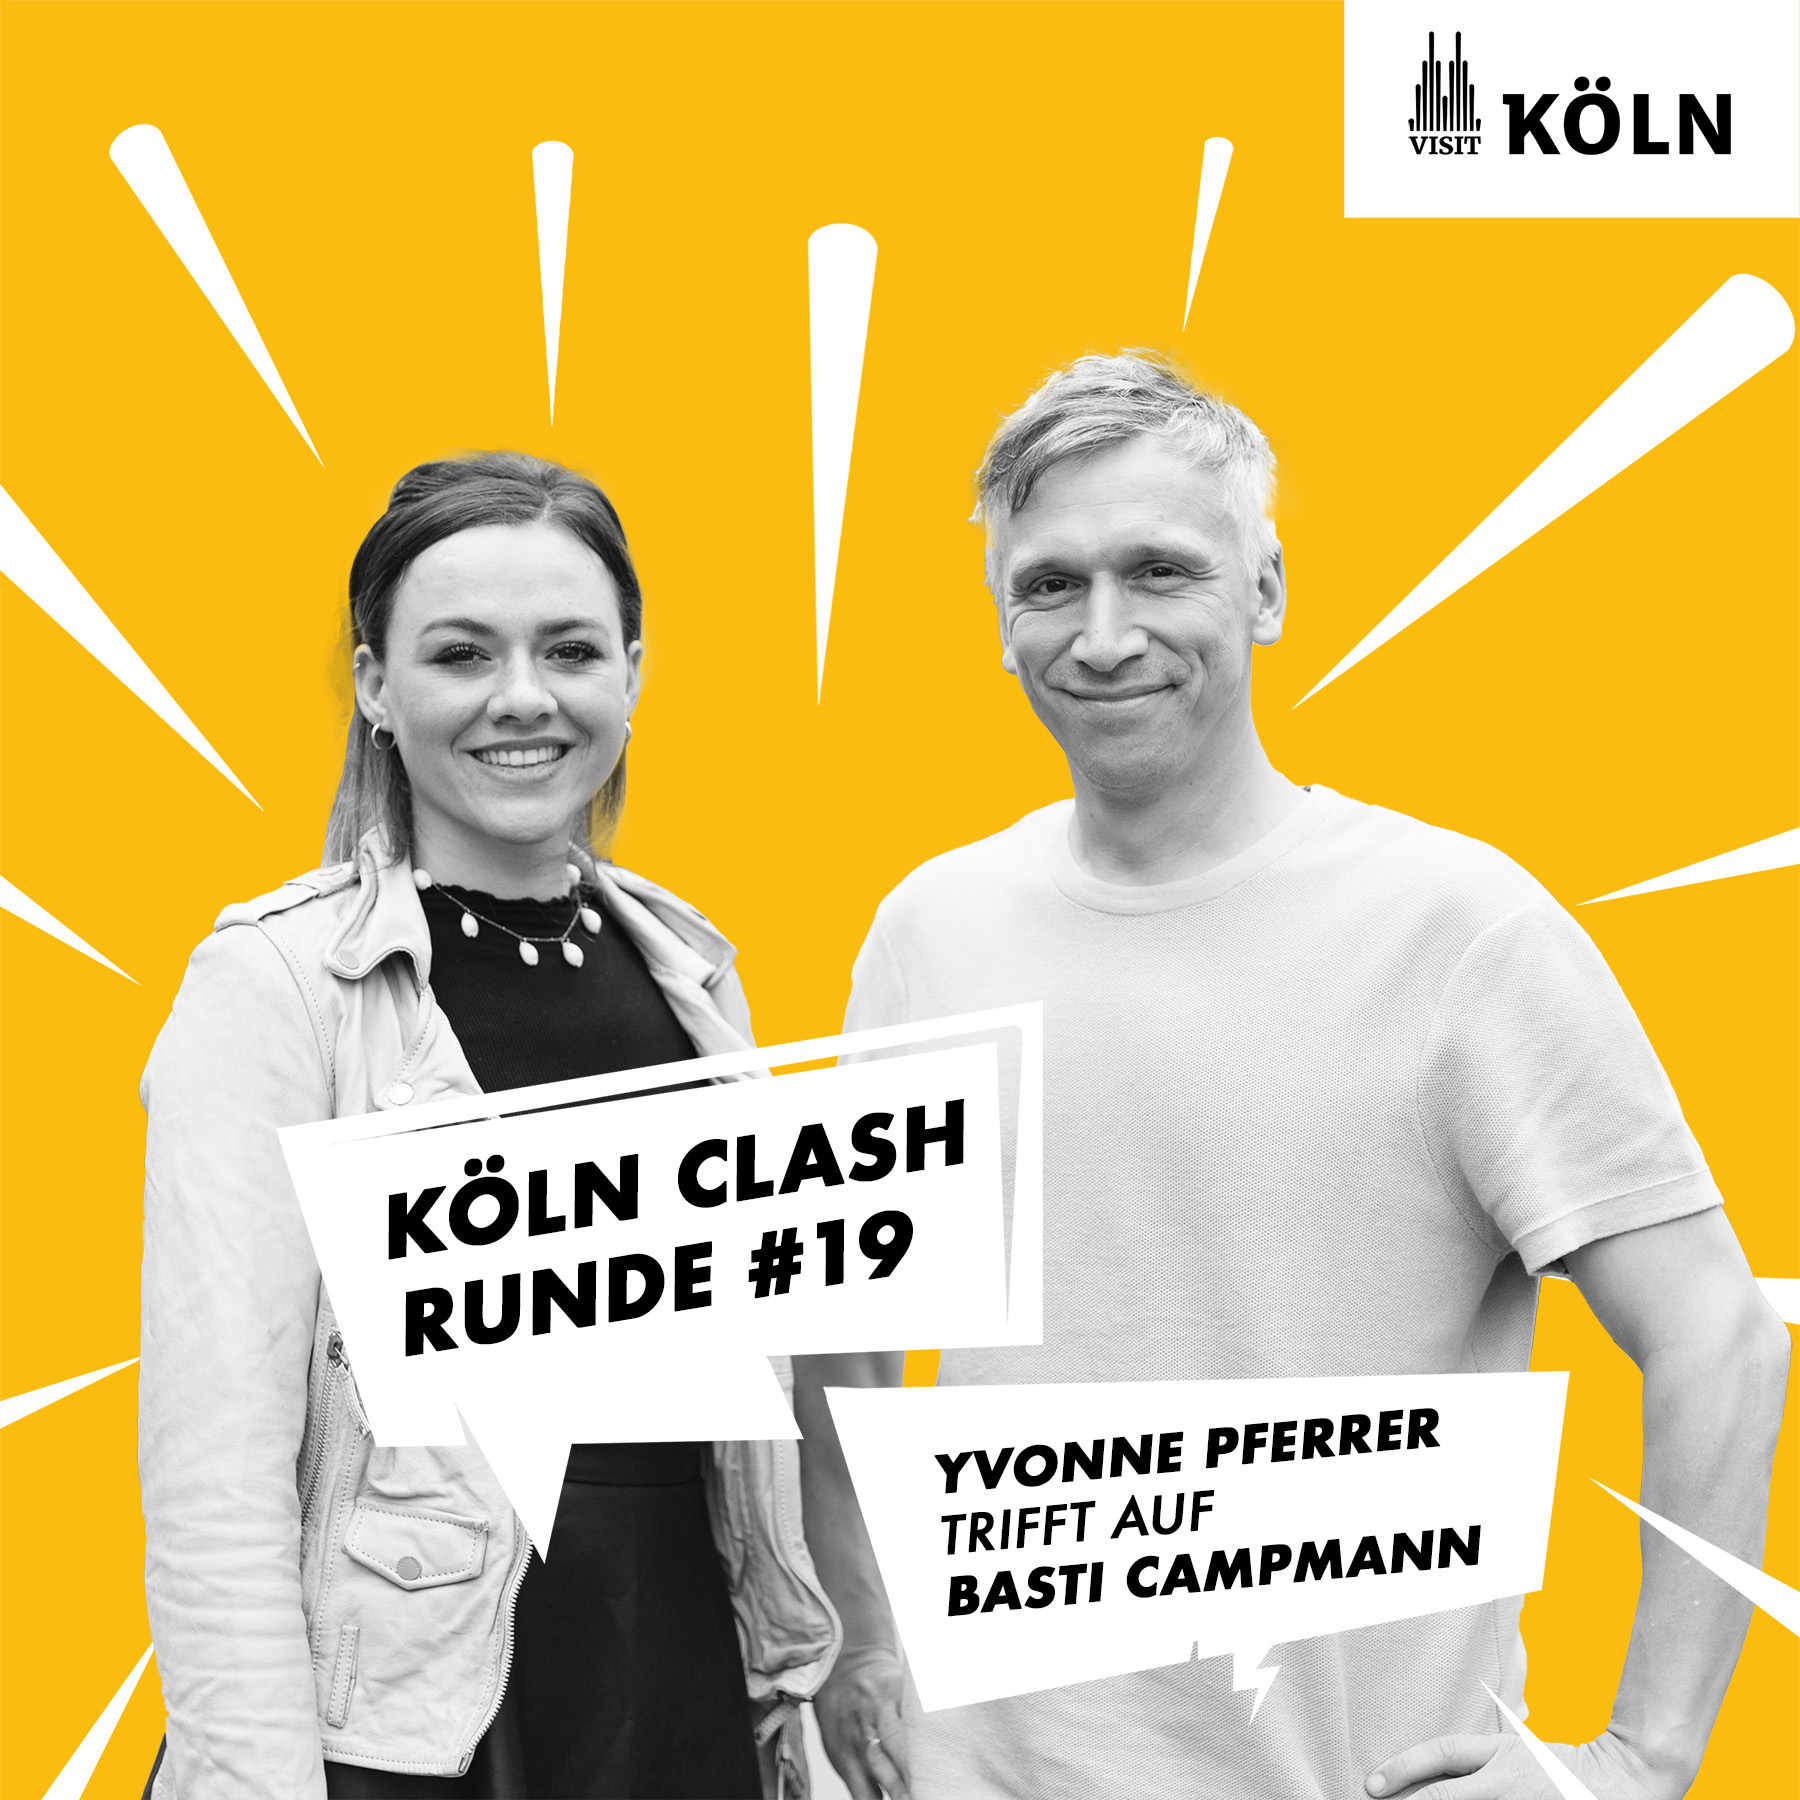 Köln Clash, Runde #19 – Yvonne Pferrer trifft auf Basti Campmann